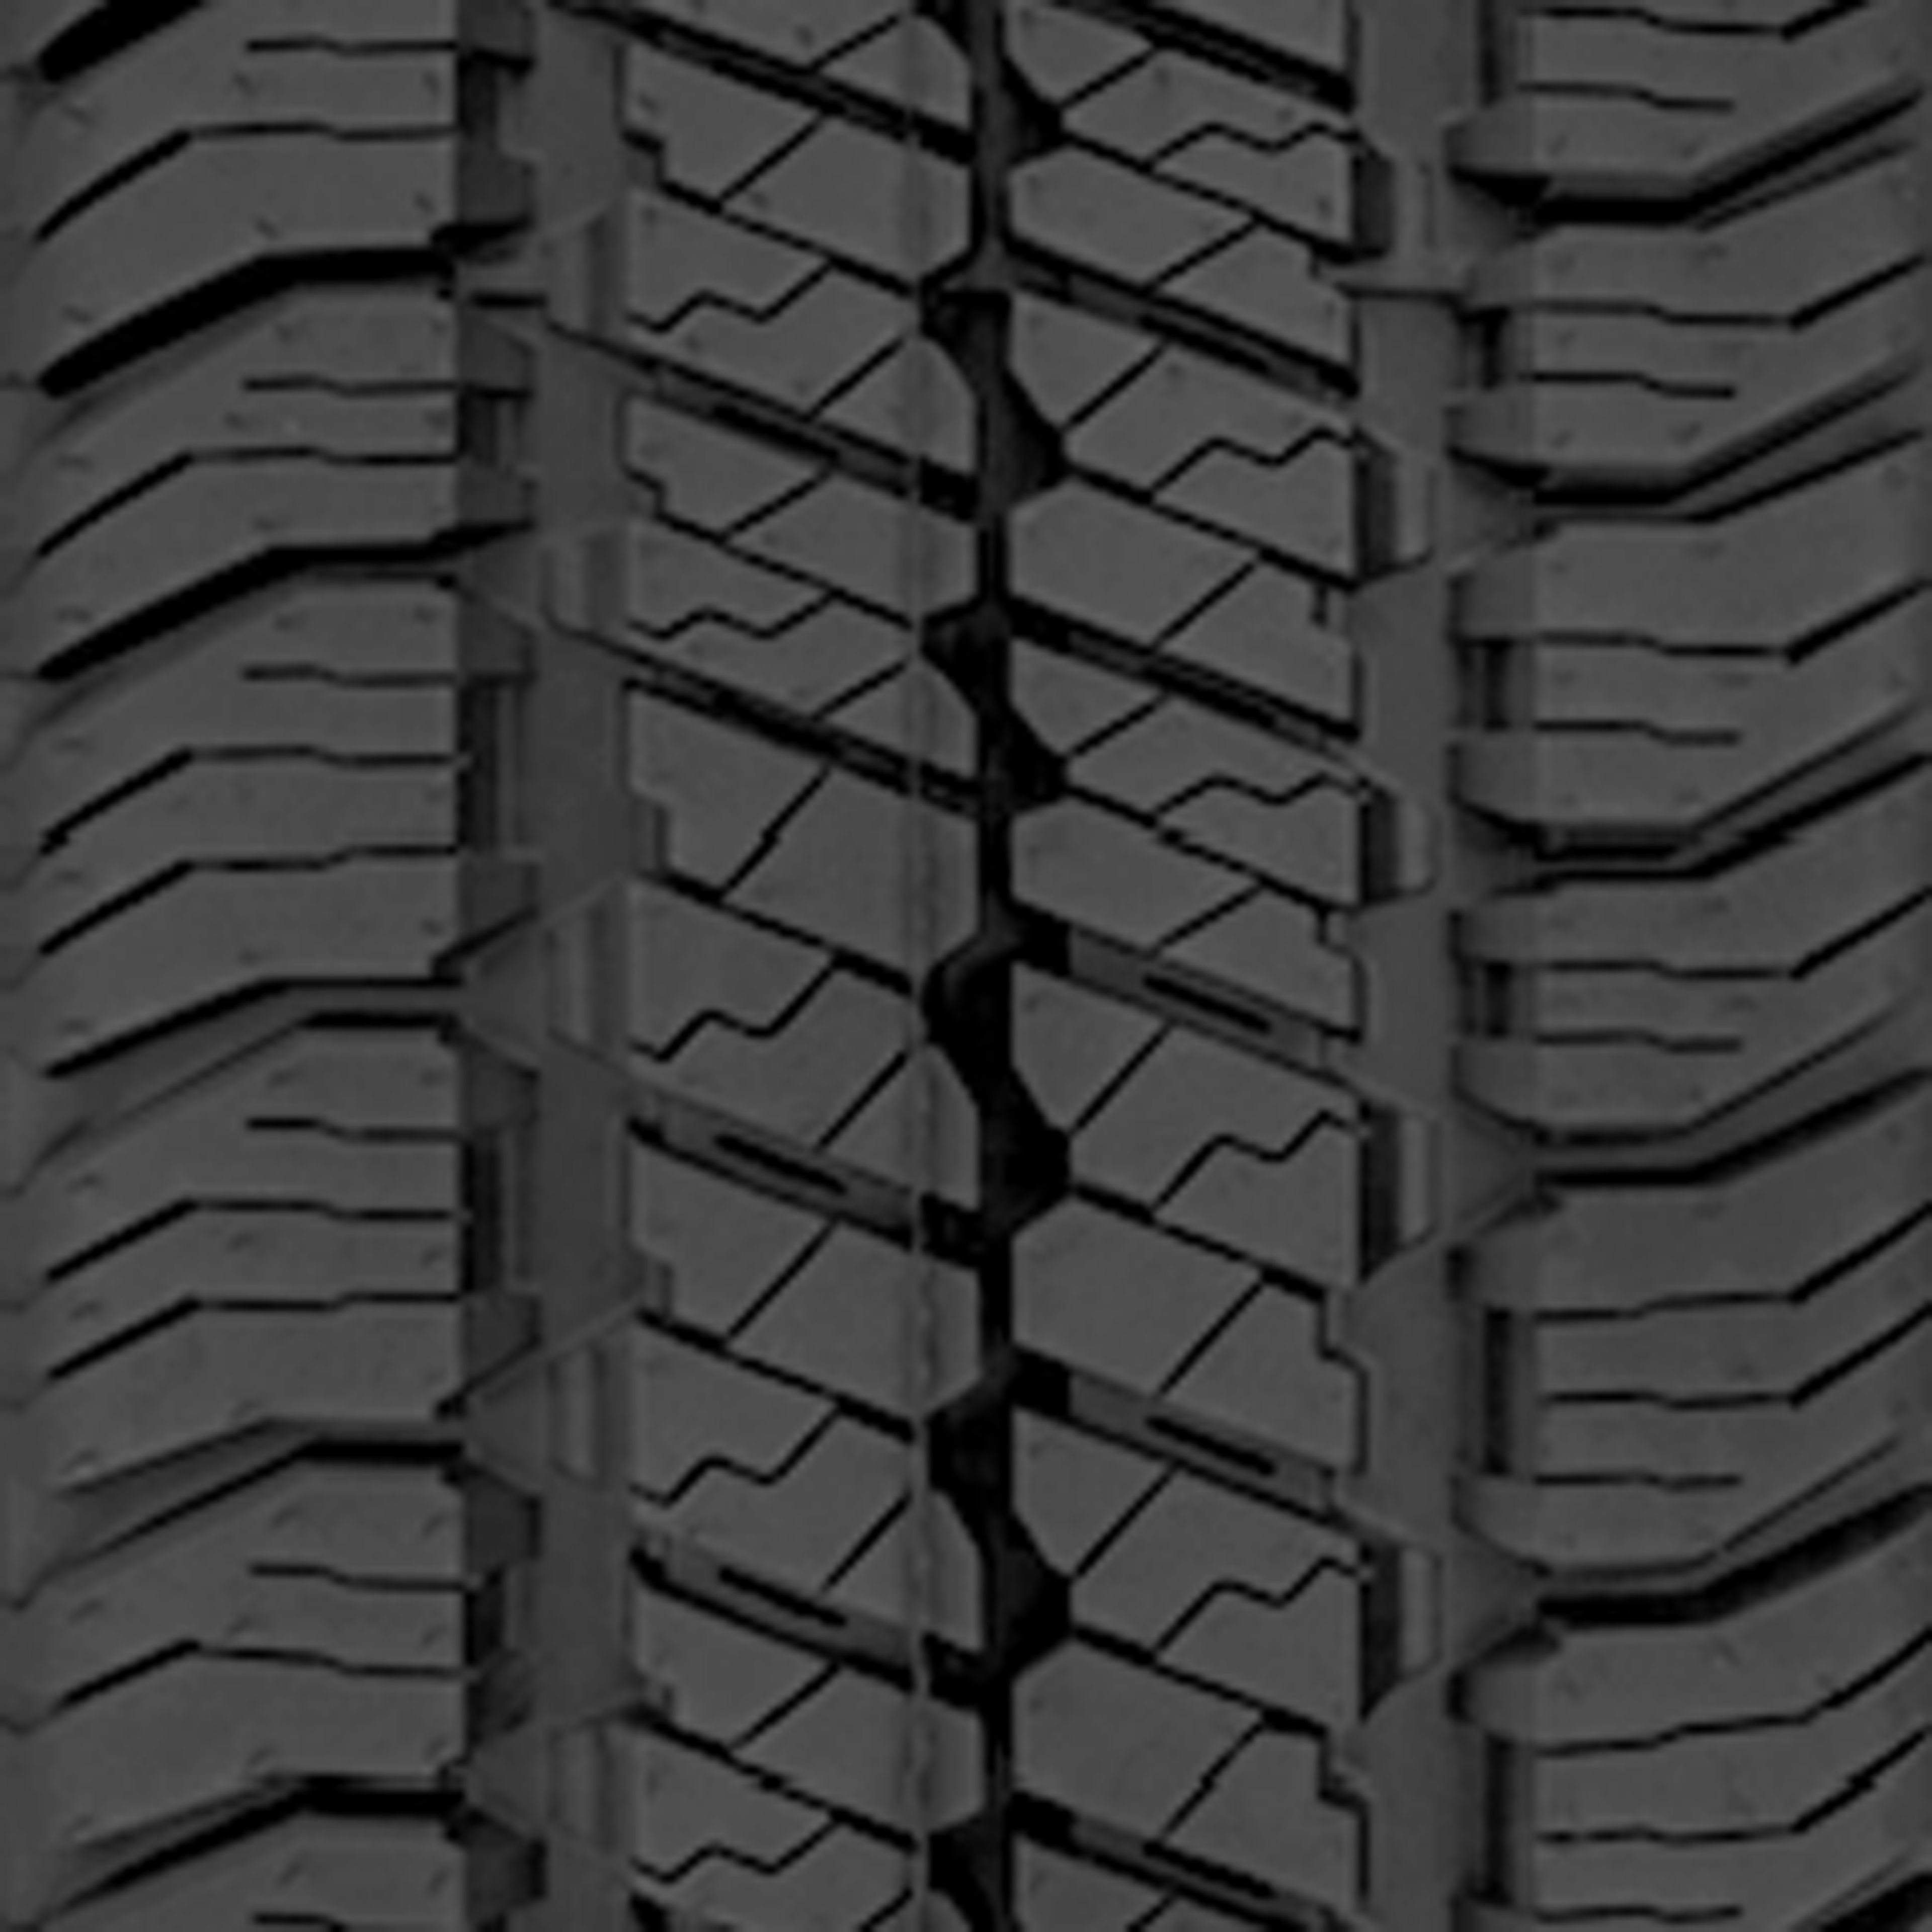 Buy Goodyear Wrangler SR-A Tires Online | SimpleTire